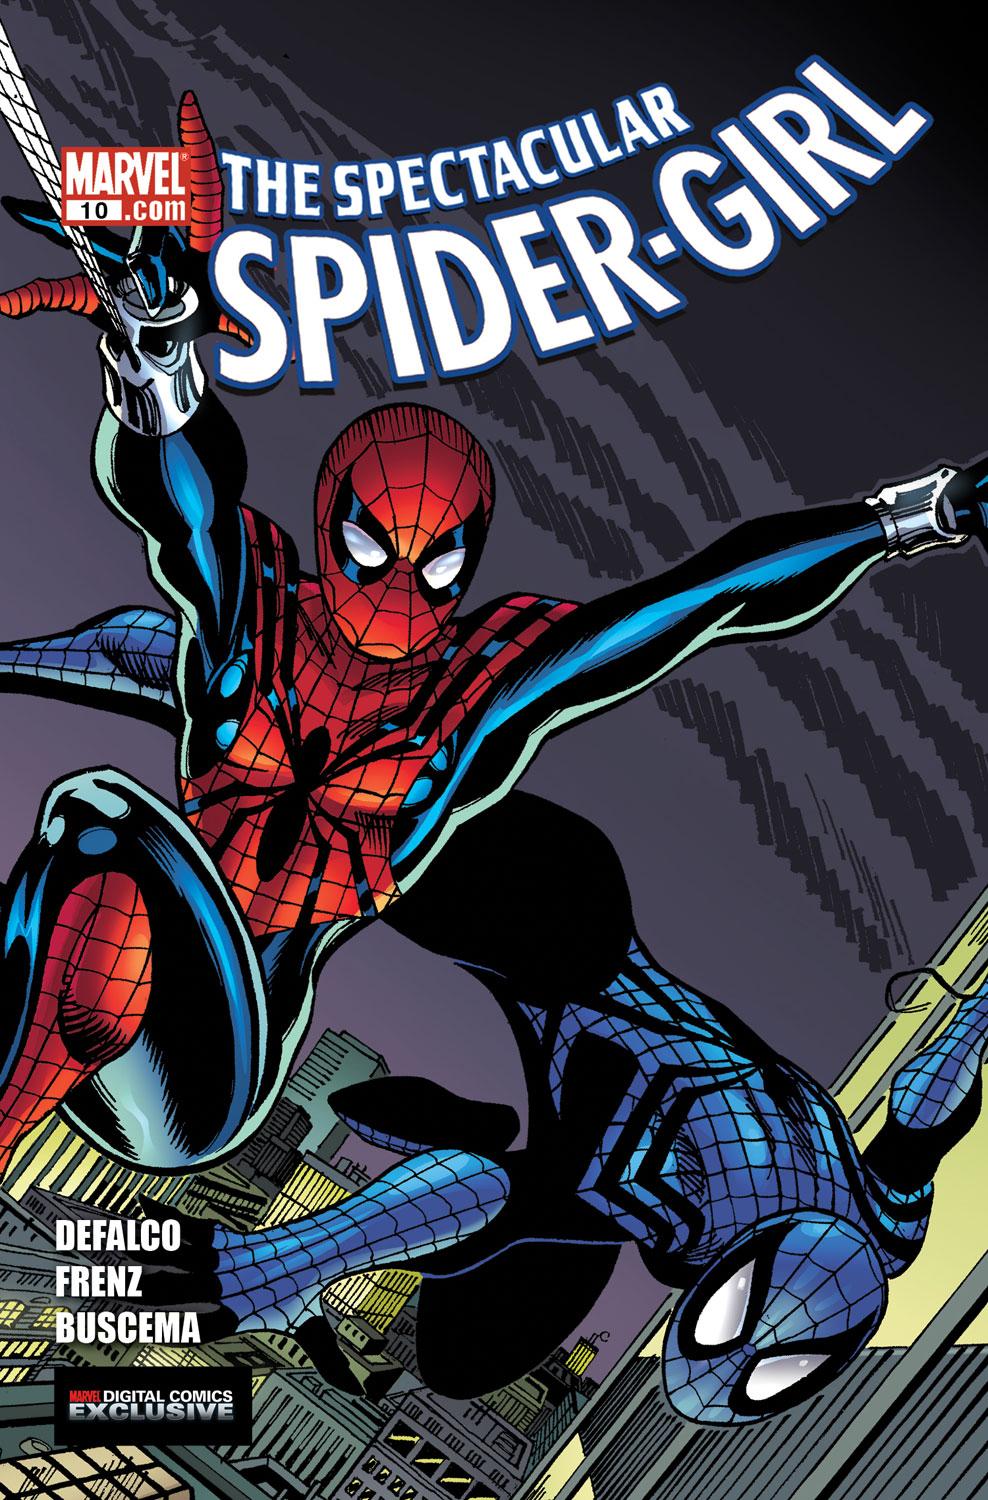 Spectacular Spider-Girl Digital Comic (2009) #10